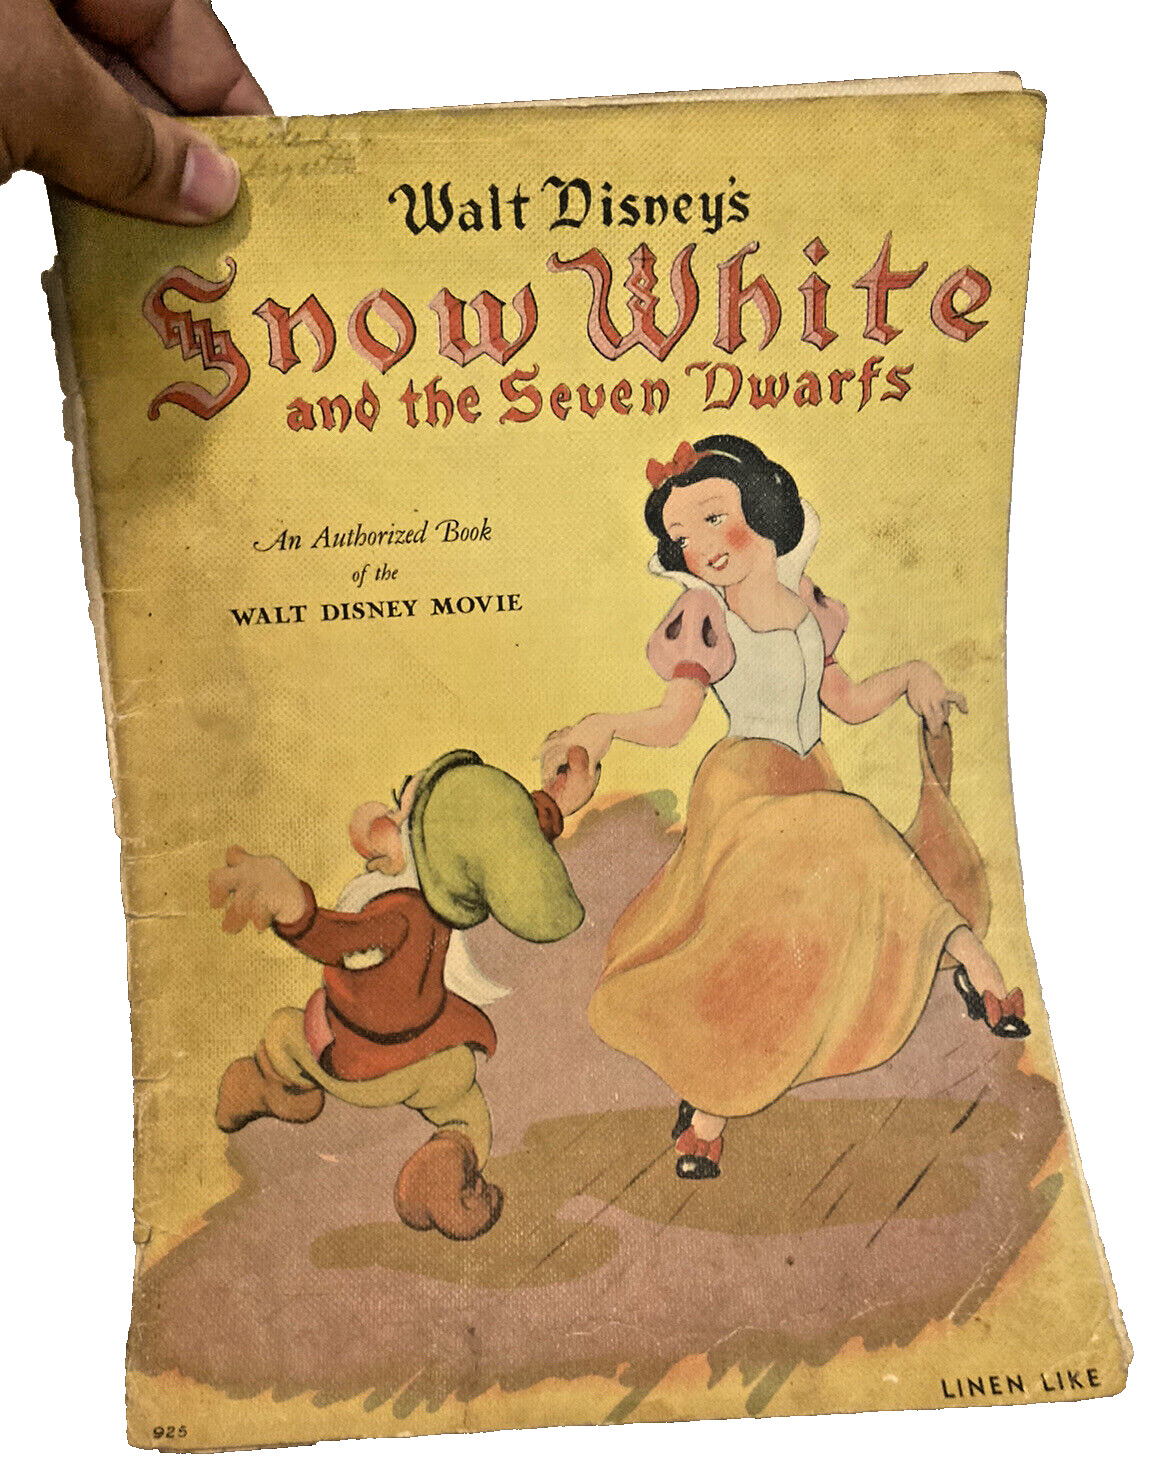 1938 Disney Snow White & The Seven Dwarfs Linen Like Book cover/back detached